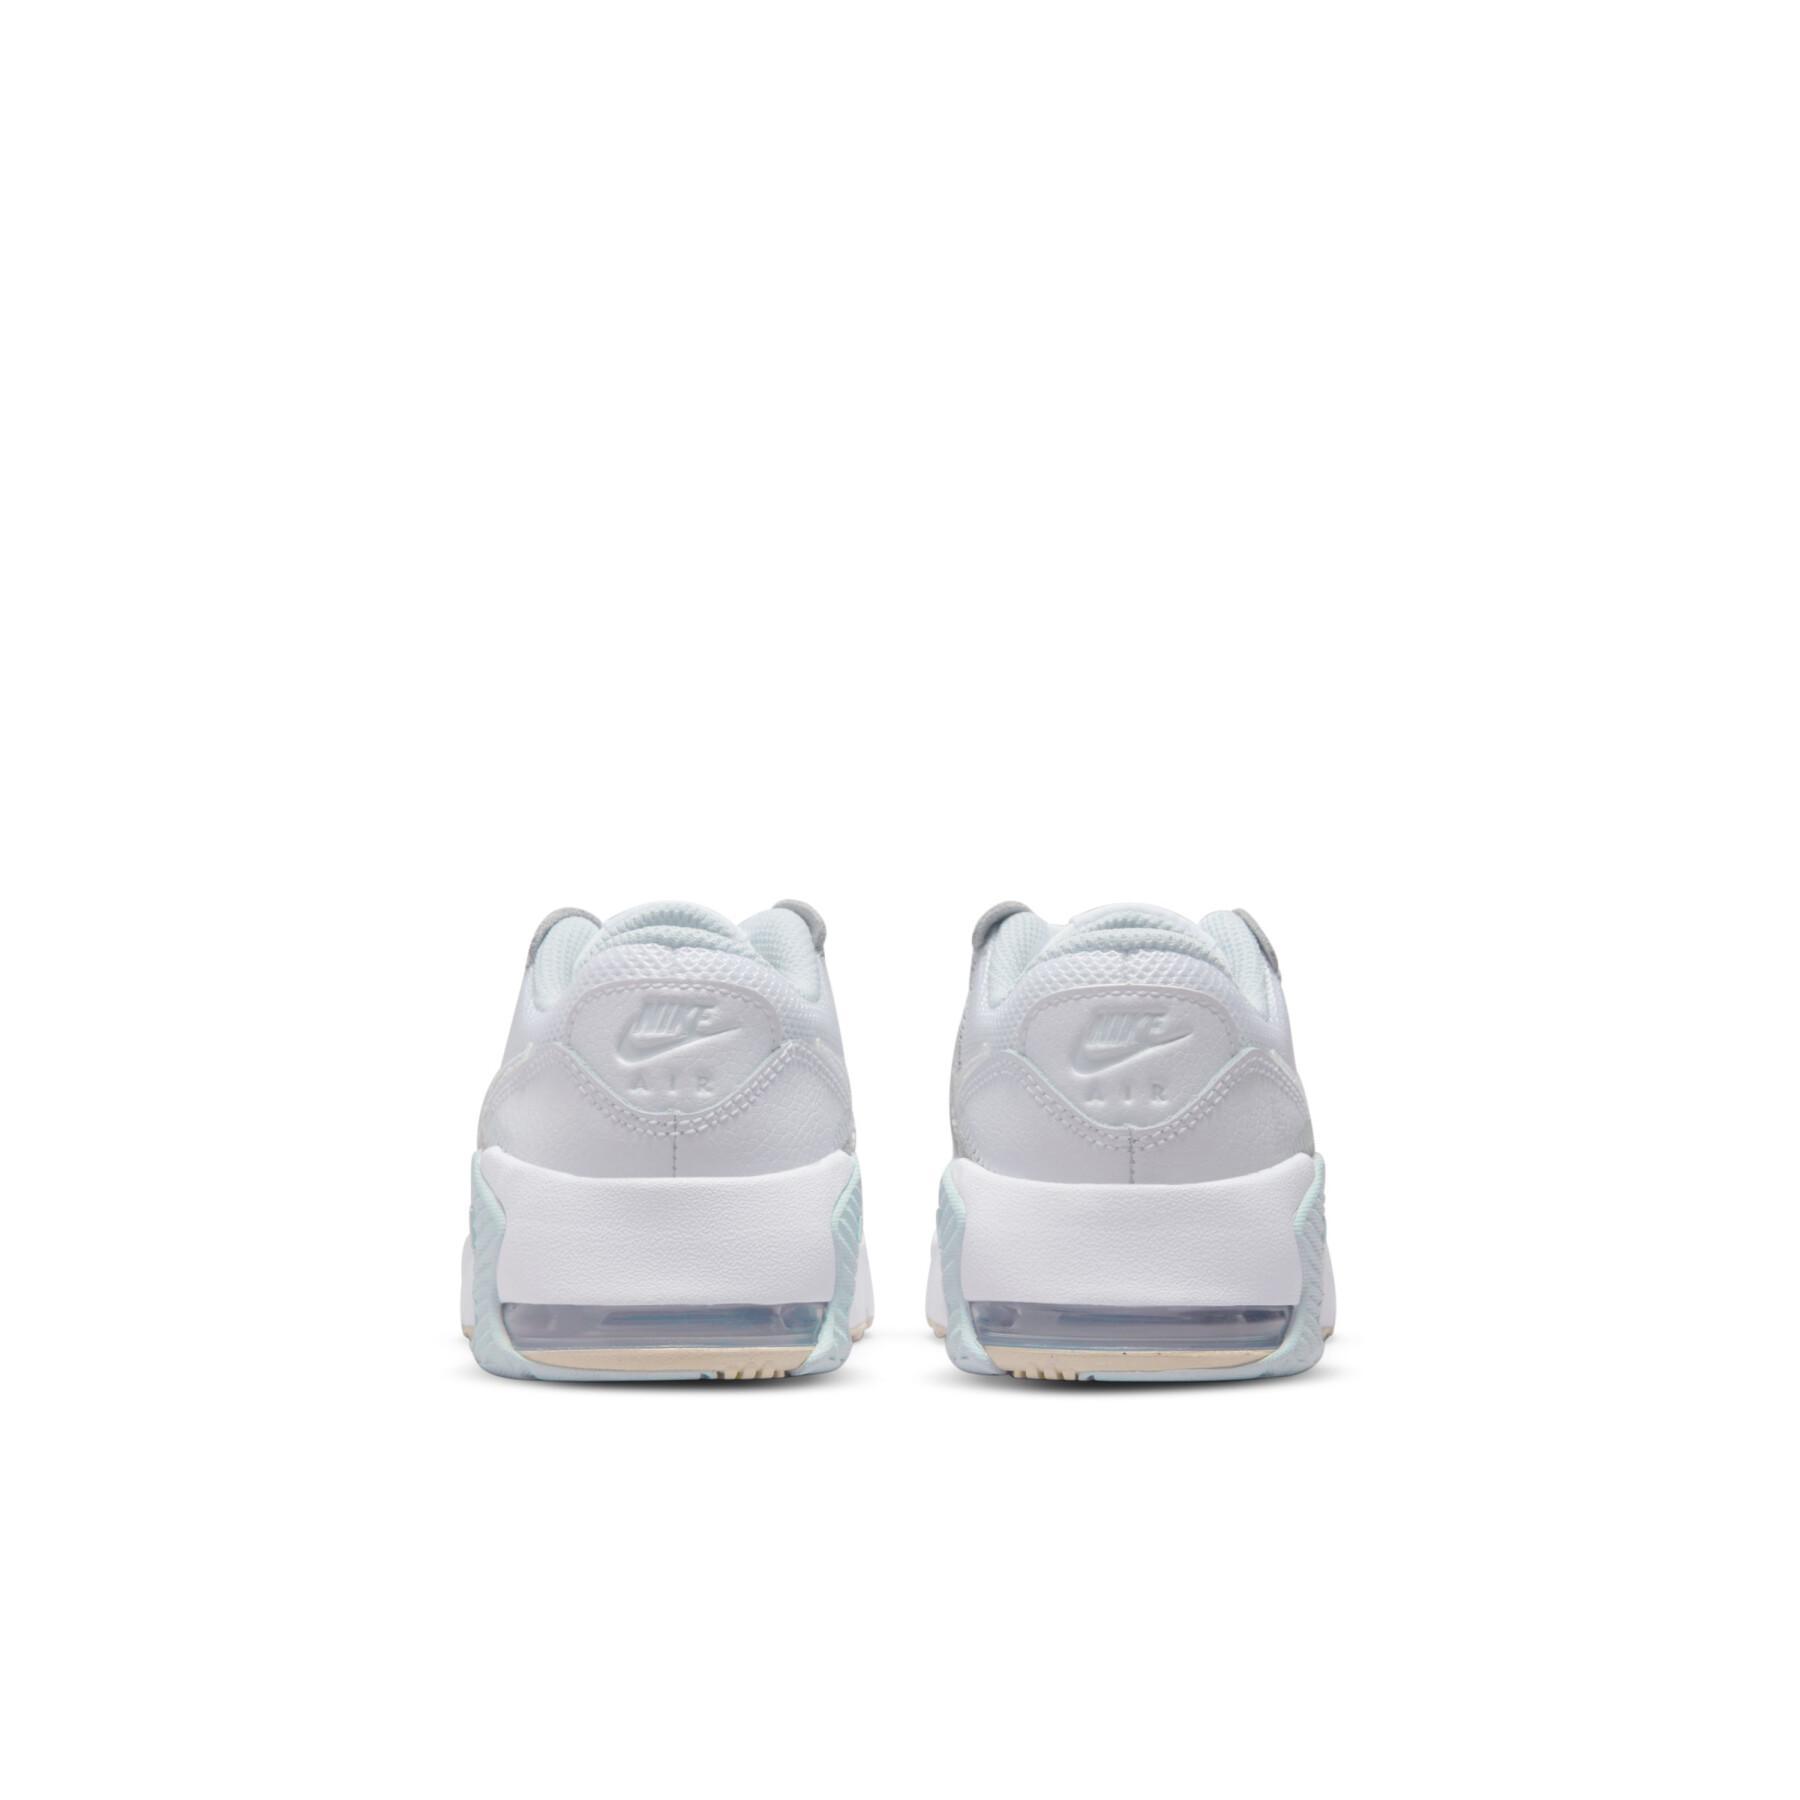 Scarpe da ginnastica per bambini Nike Air Max Excee